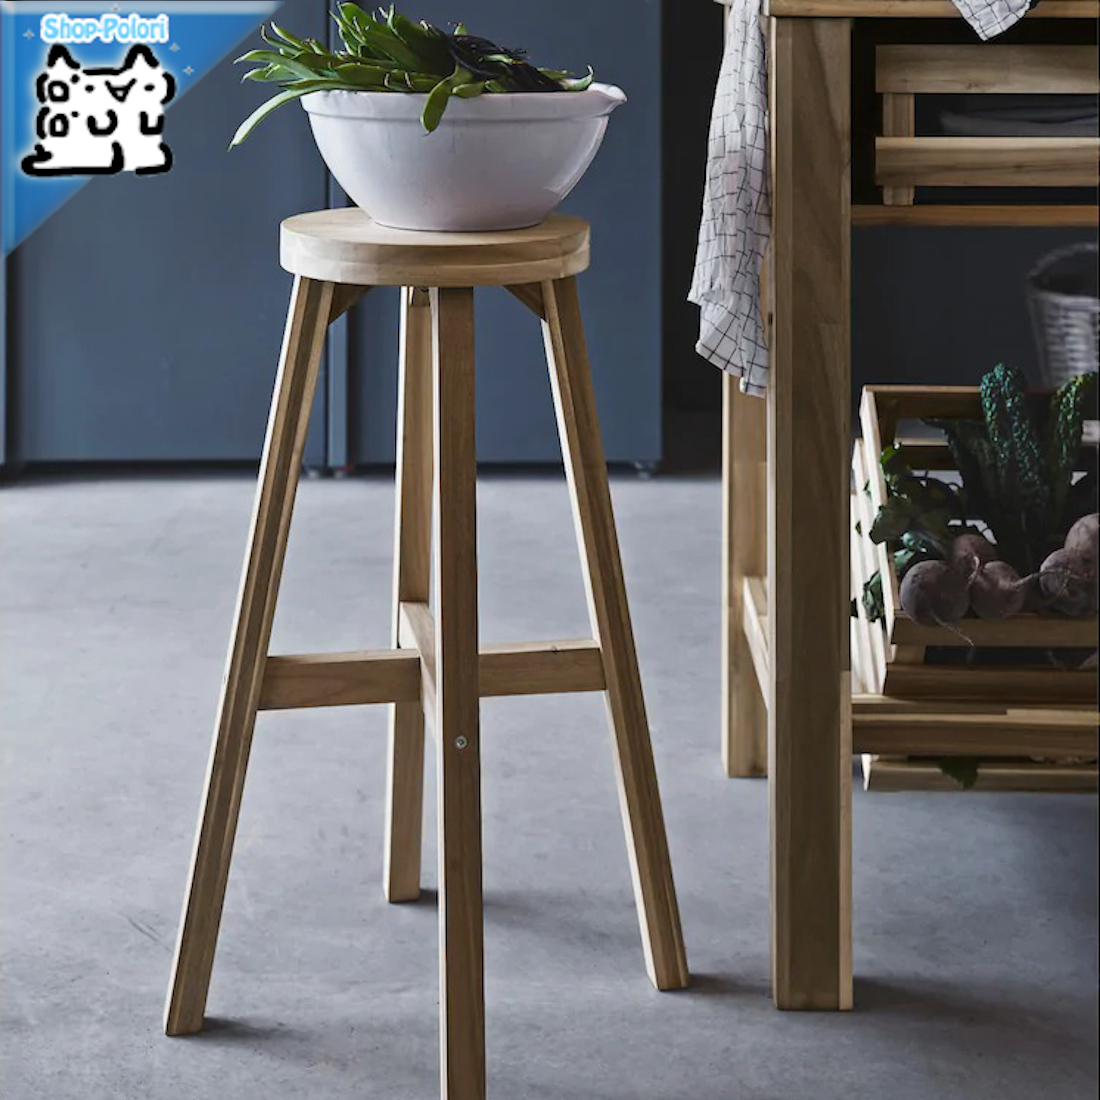 【IKEA Original】SKOGSTA -スコグスタ- バースツール アカシア材 48x70 cm画像